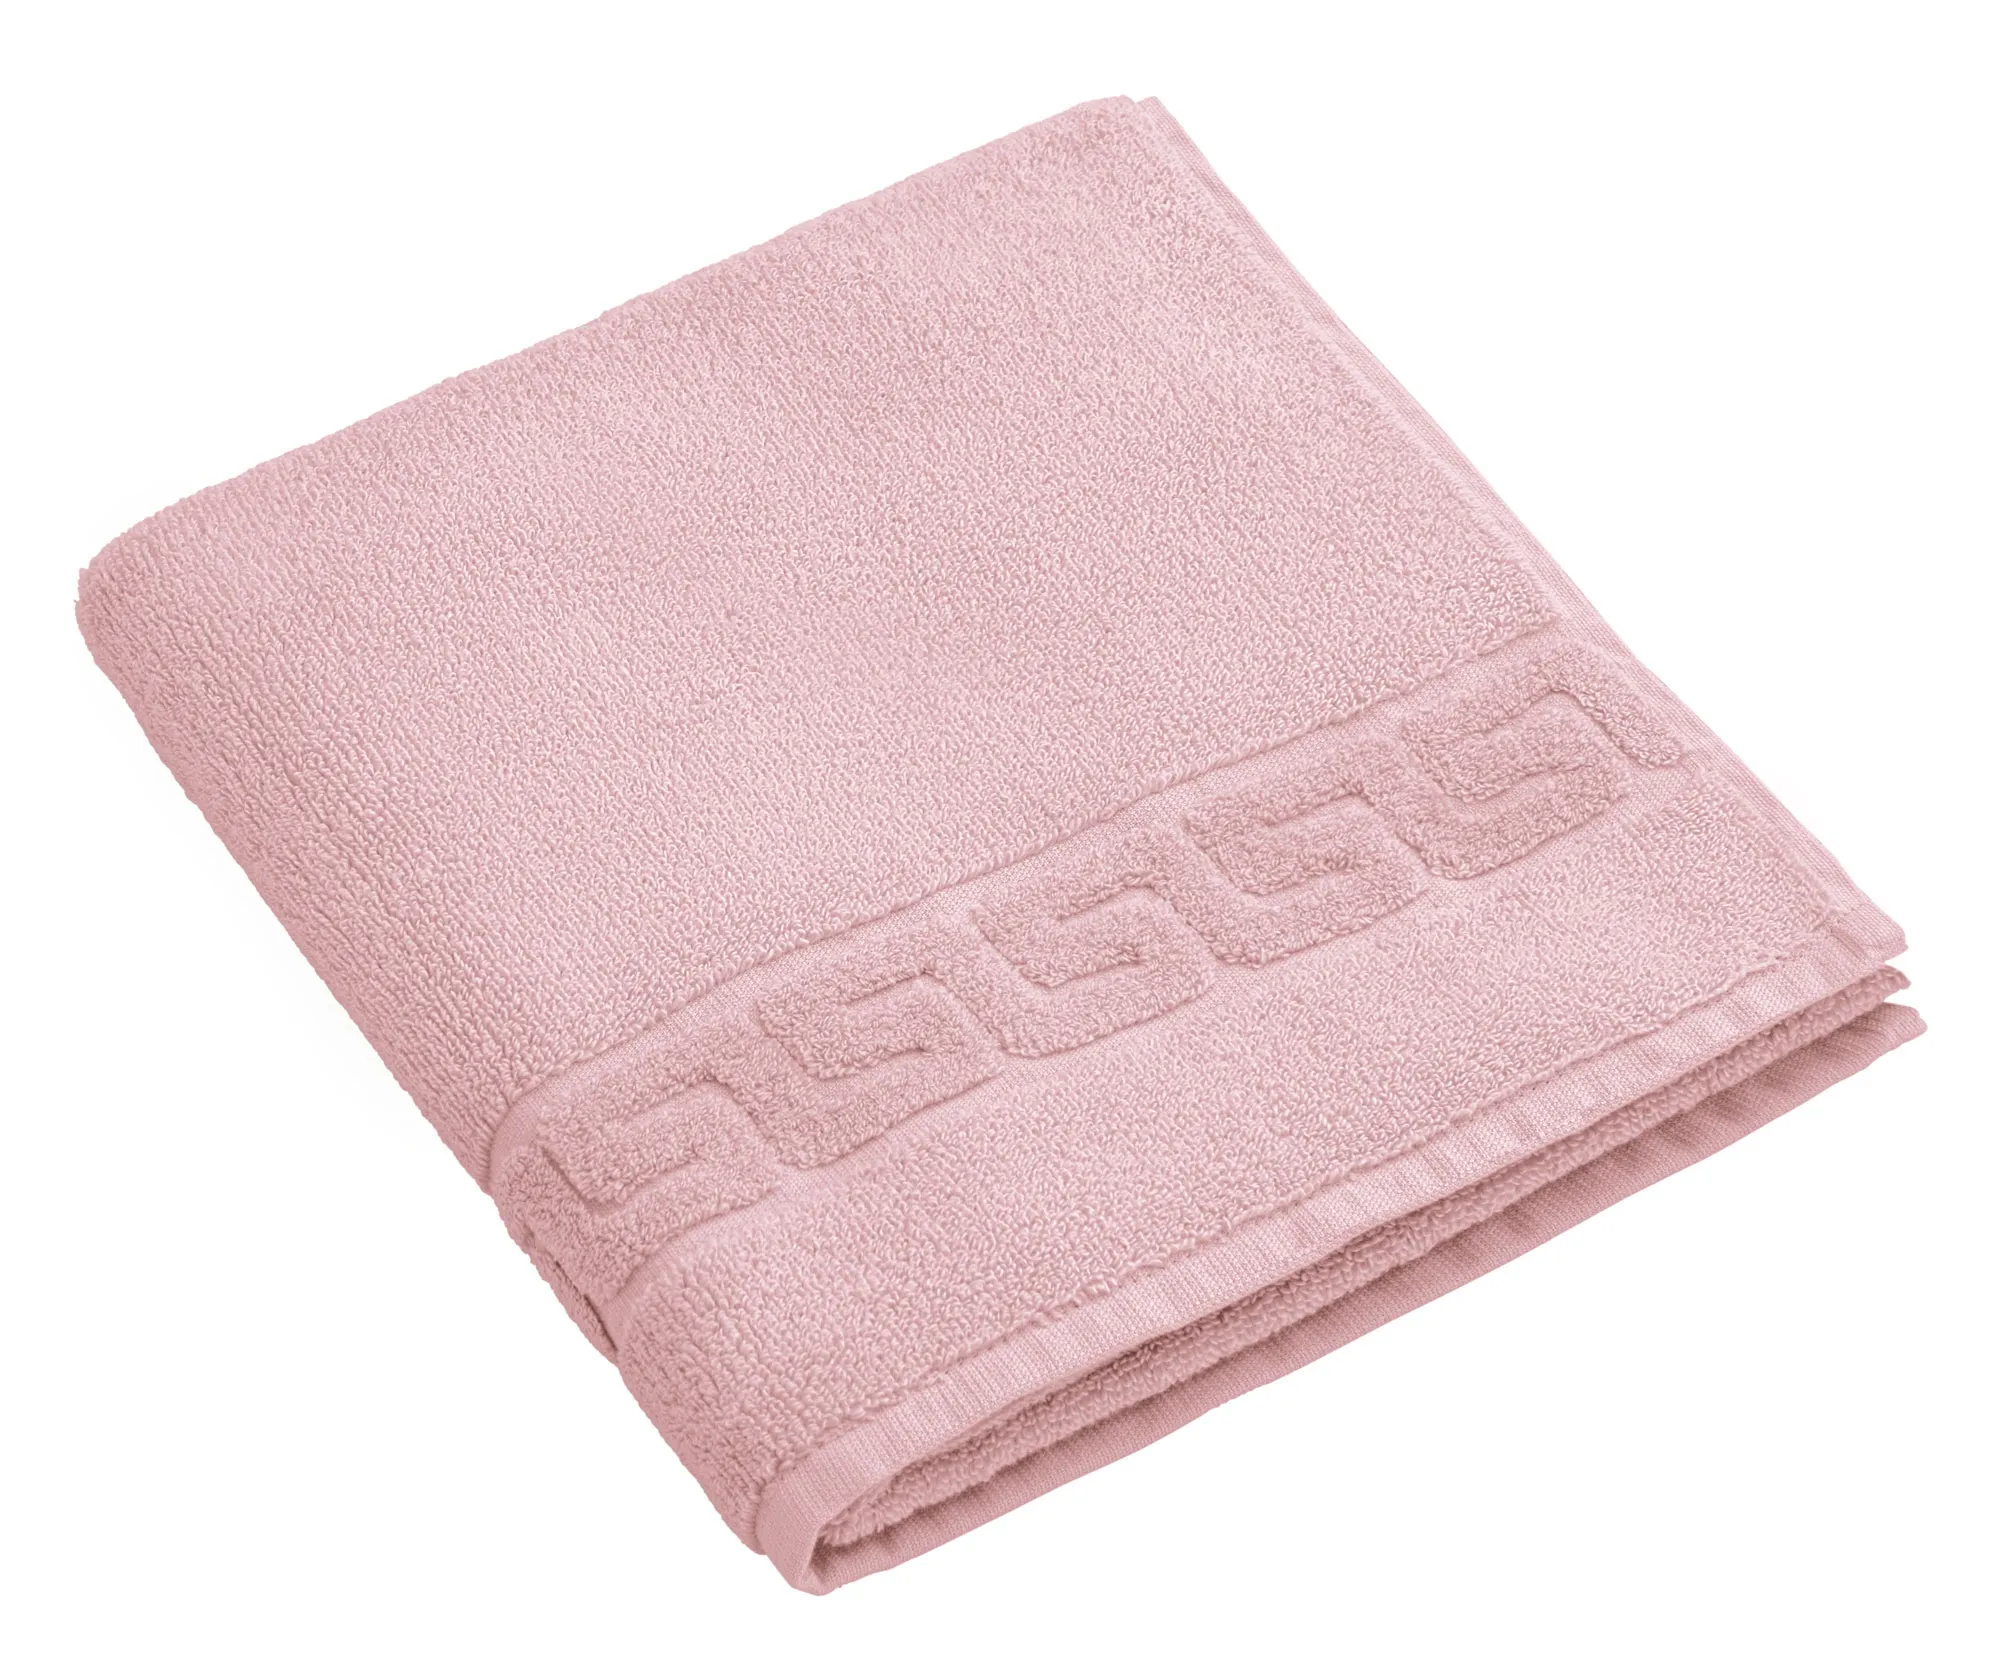 Махровое полотенце Dreamflor розового цвета от магазина Beddington.ru